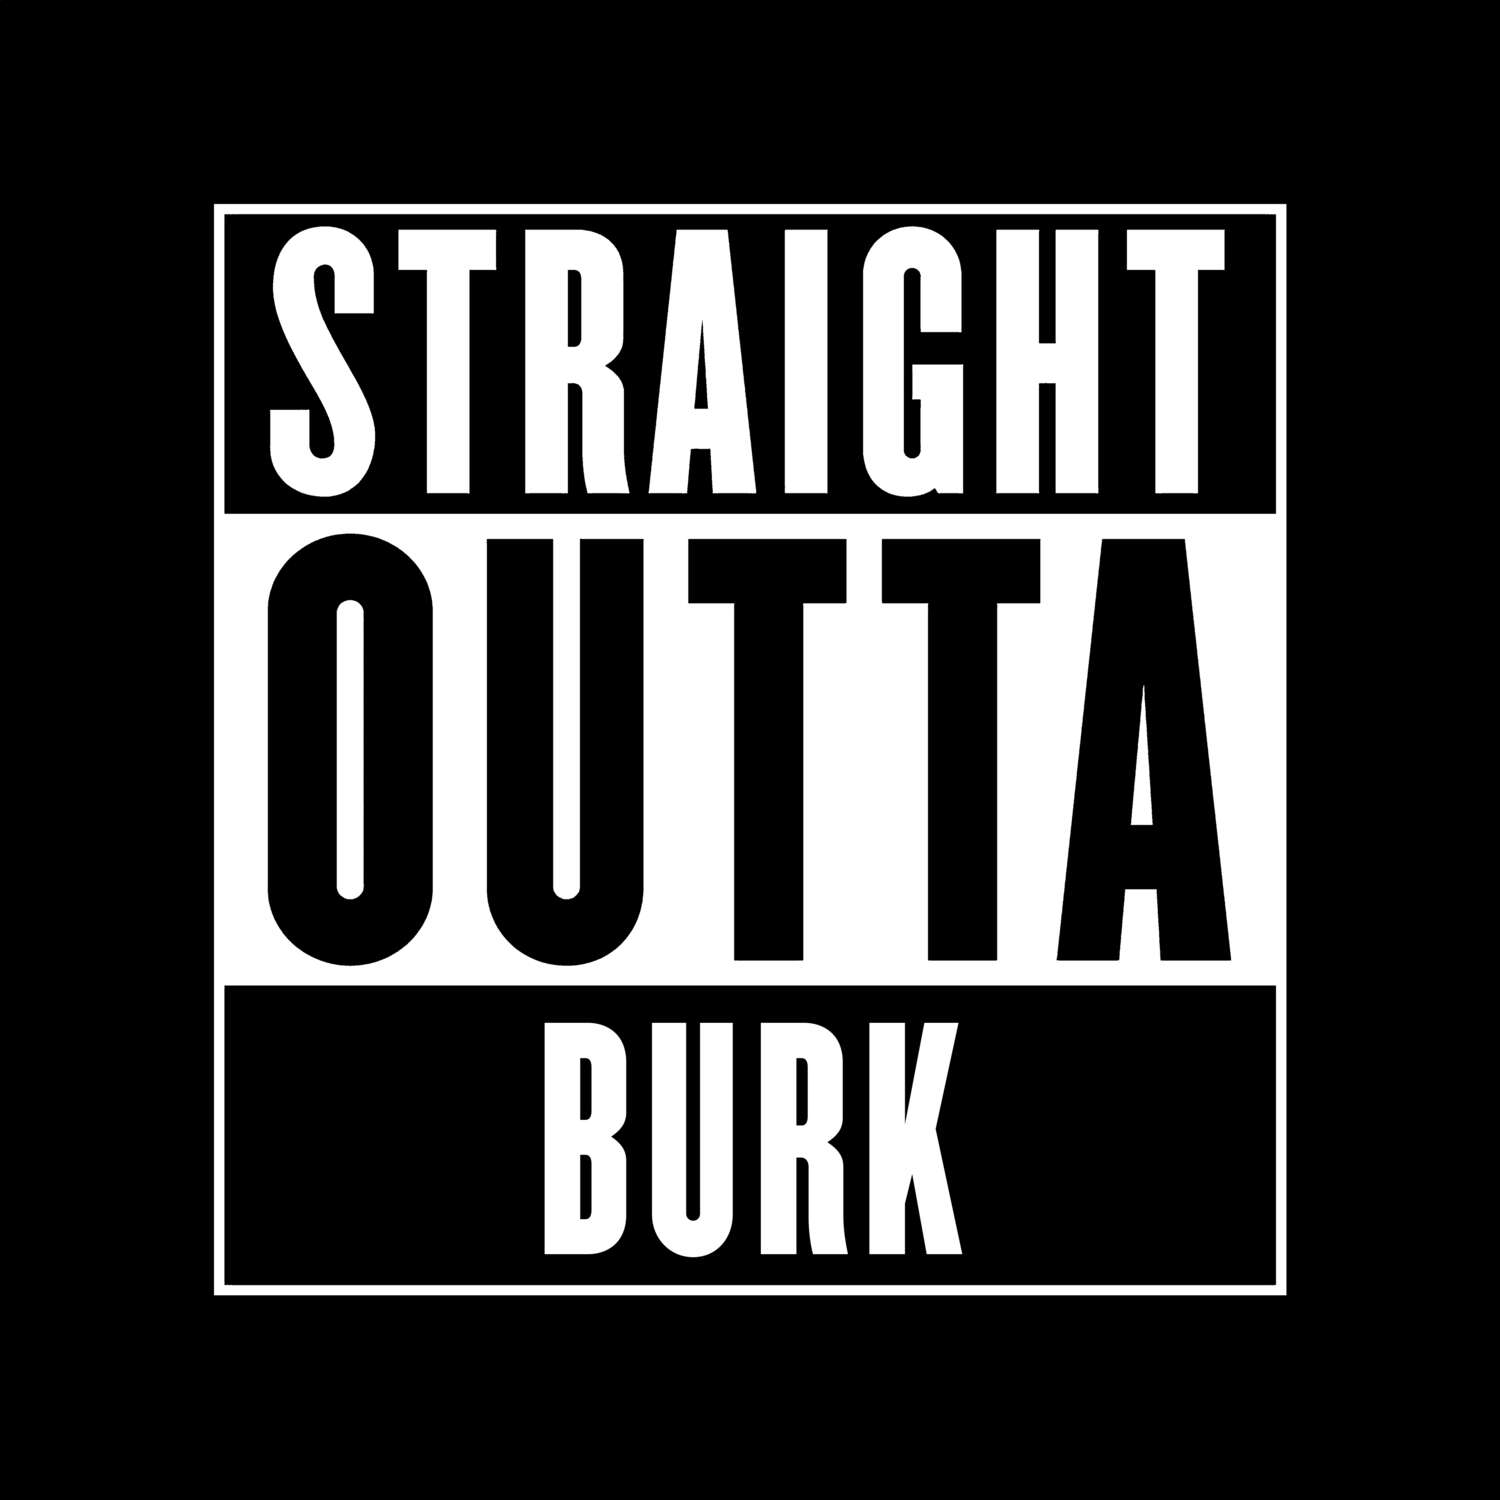 Burk T-Shirt »Straight Outta«